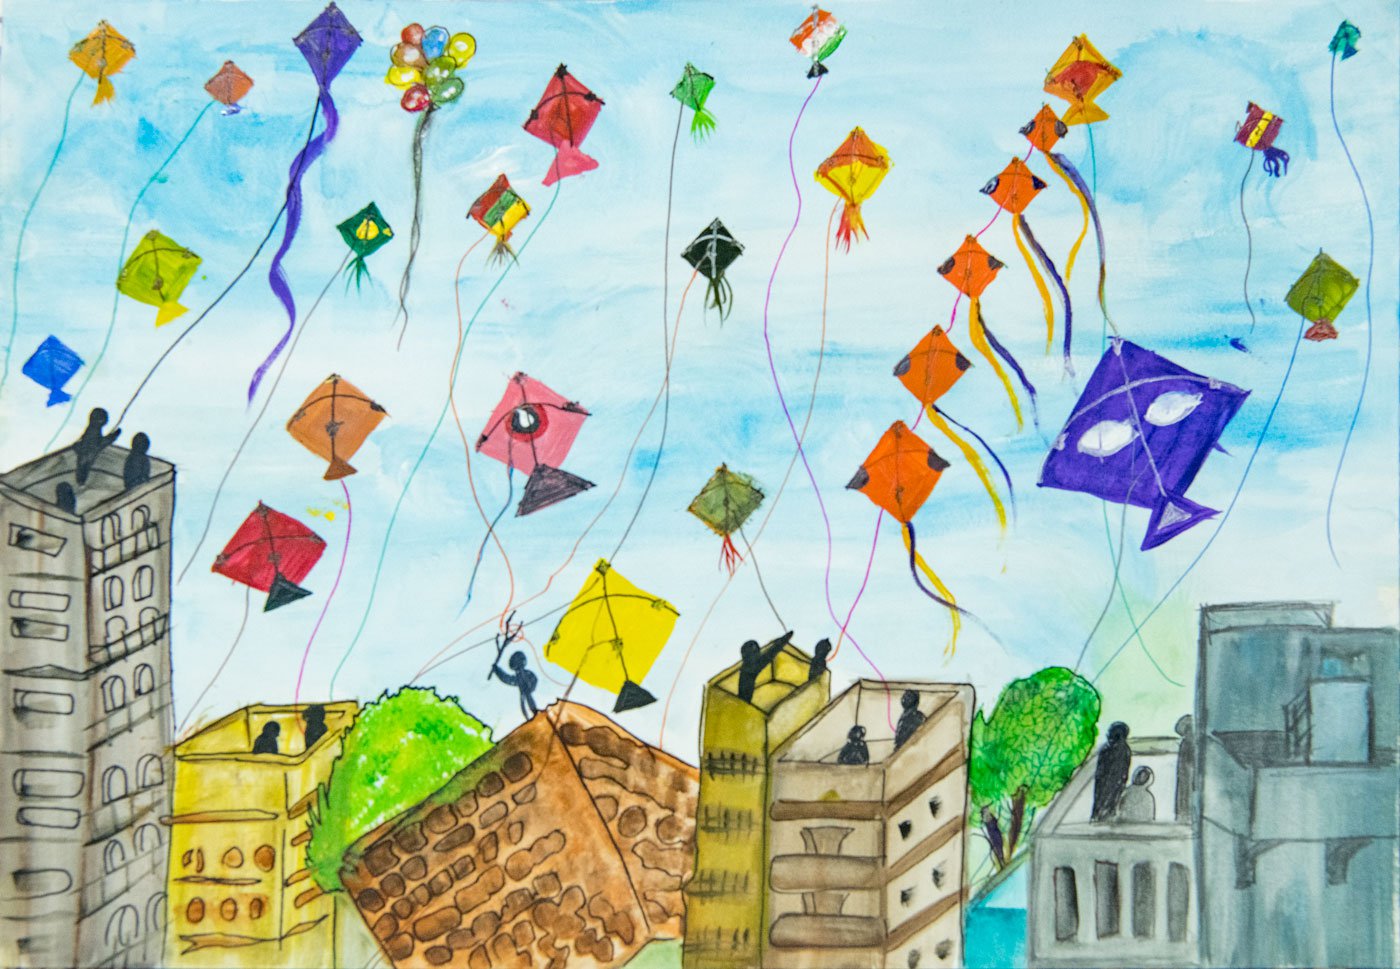 olourful kites decorate the sky on Uttarayan day in Gujarat. Illustration by Anushree Ramanathan and Rahul Ramanathan